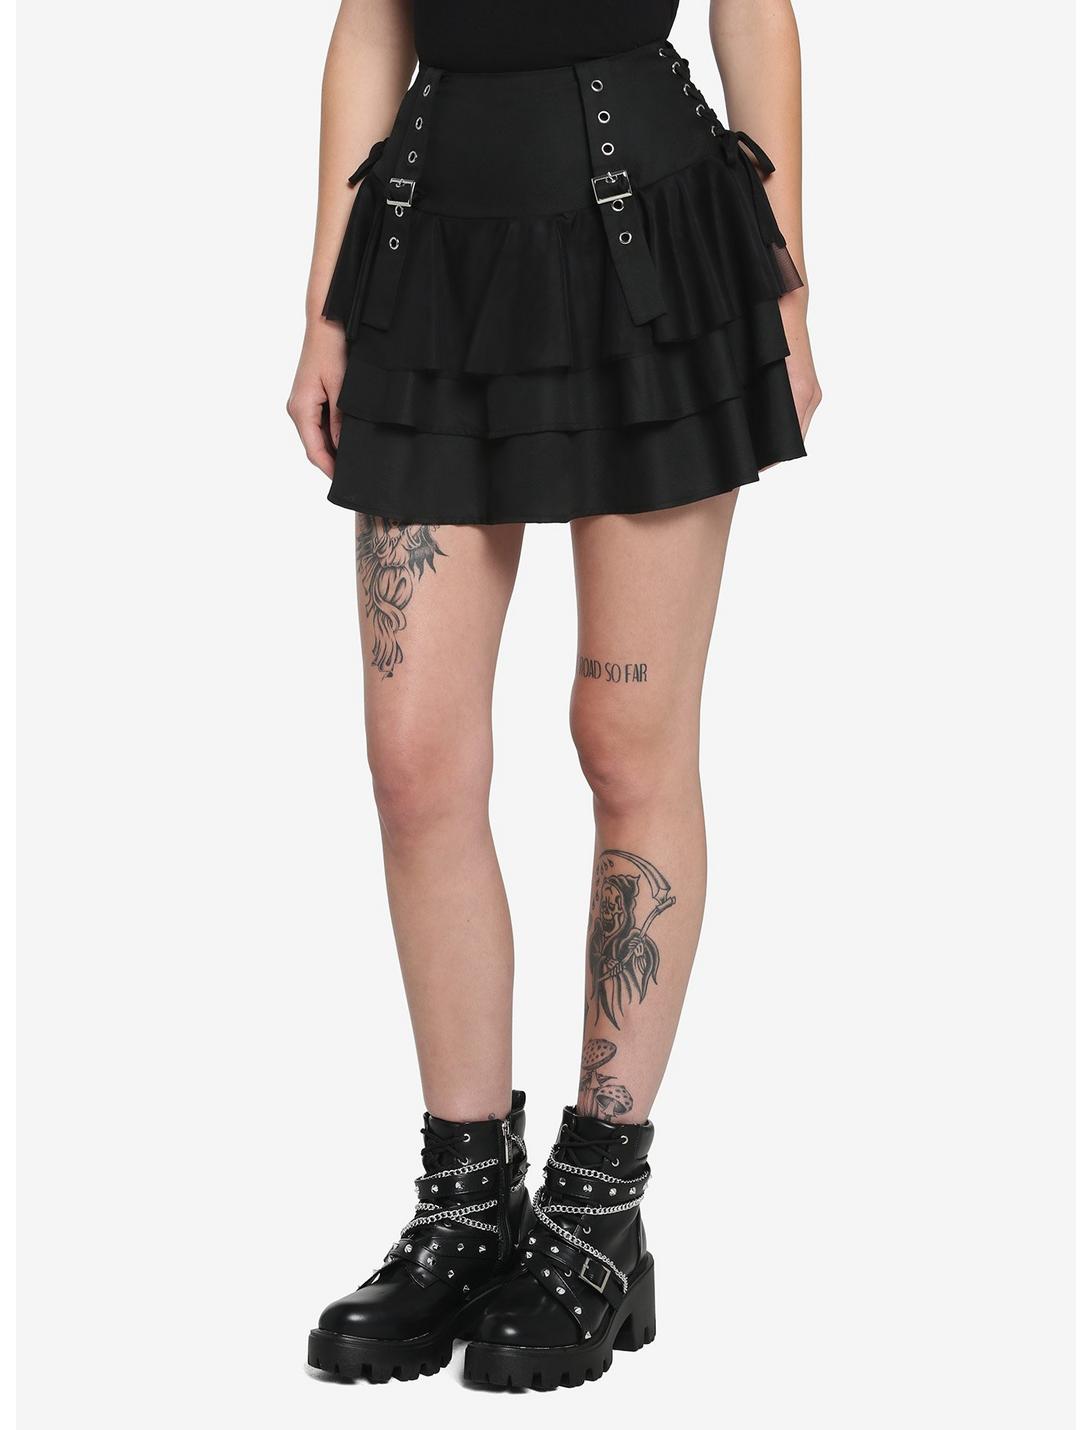 Black Buckle Tiered Skirt, BLACK, hi-res